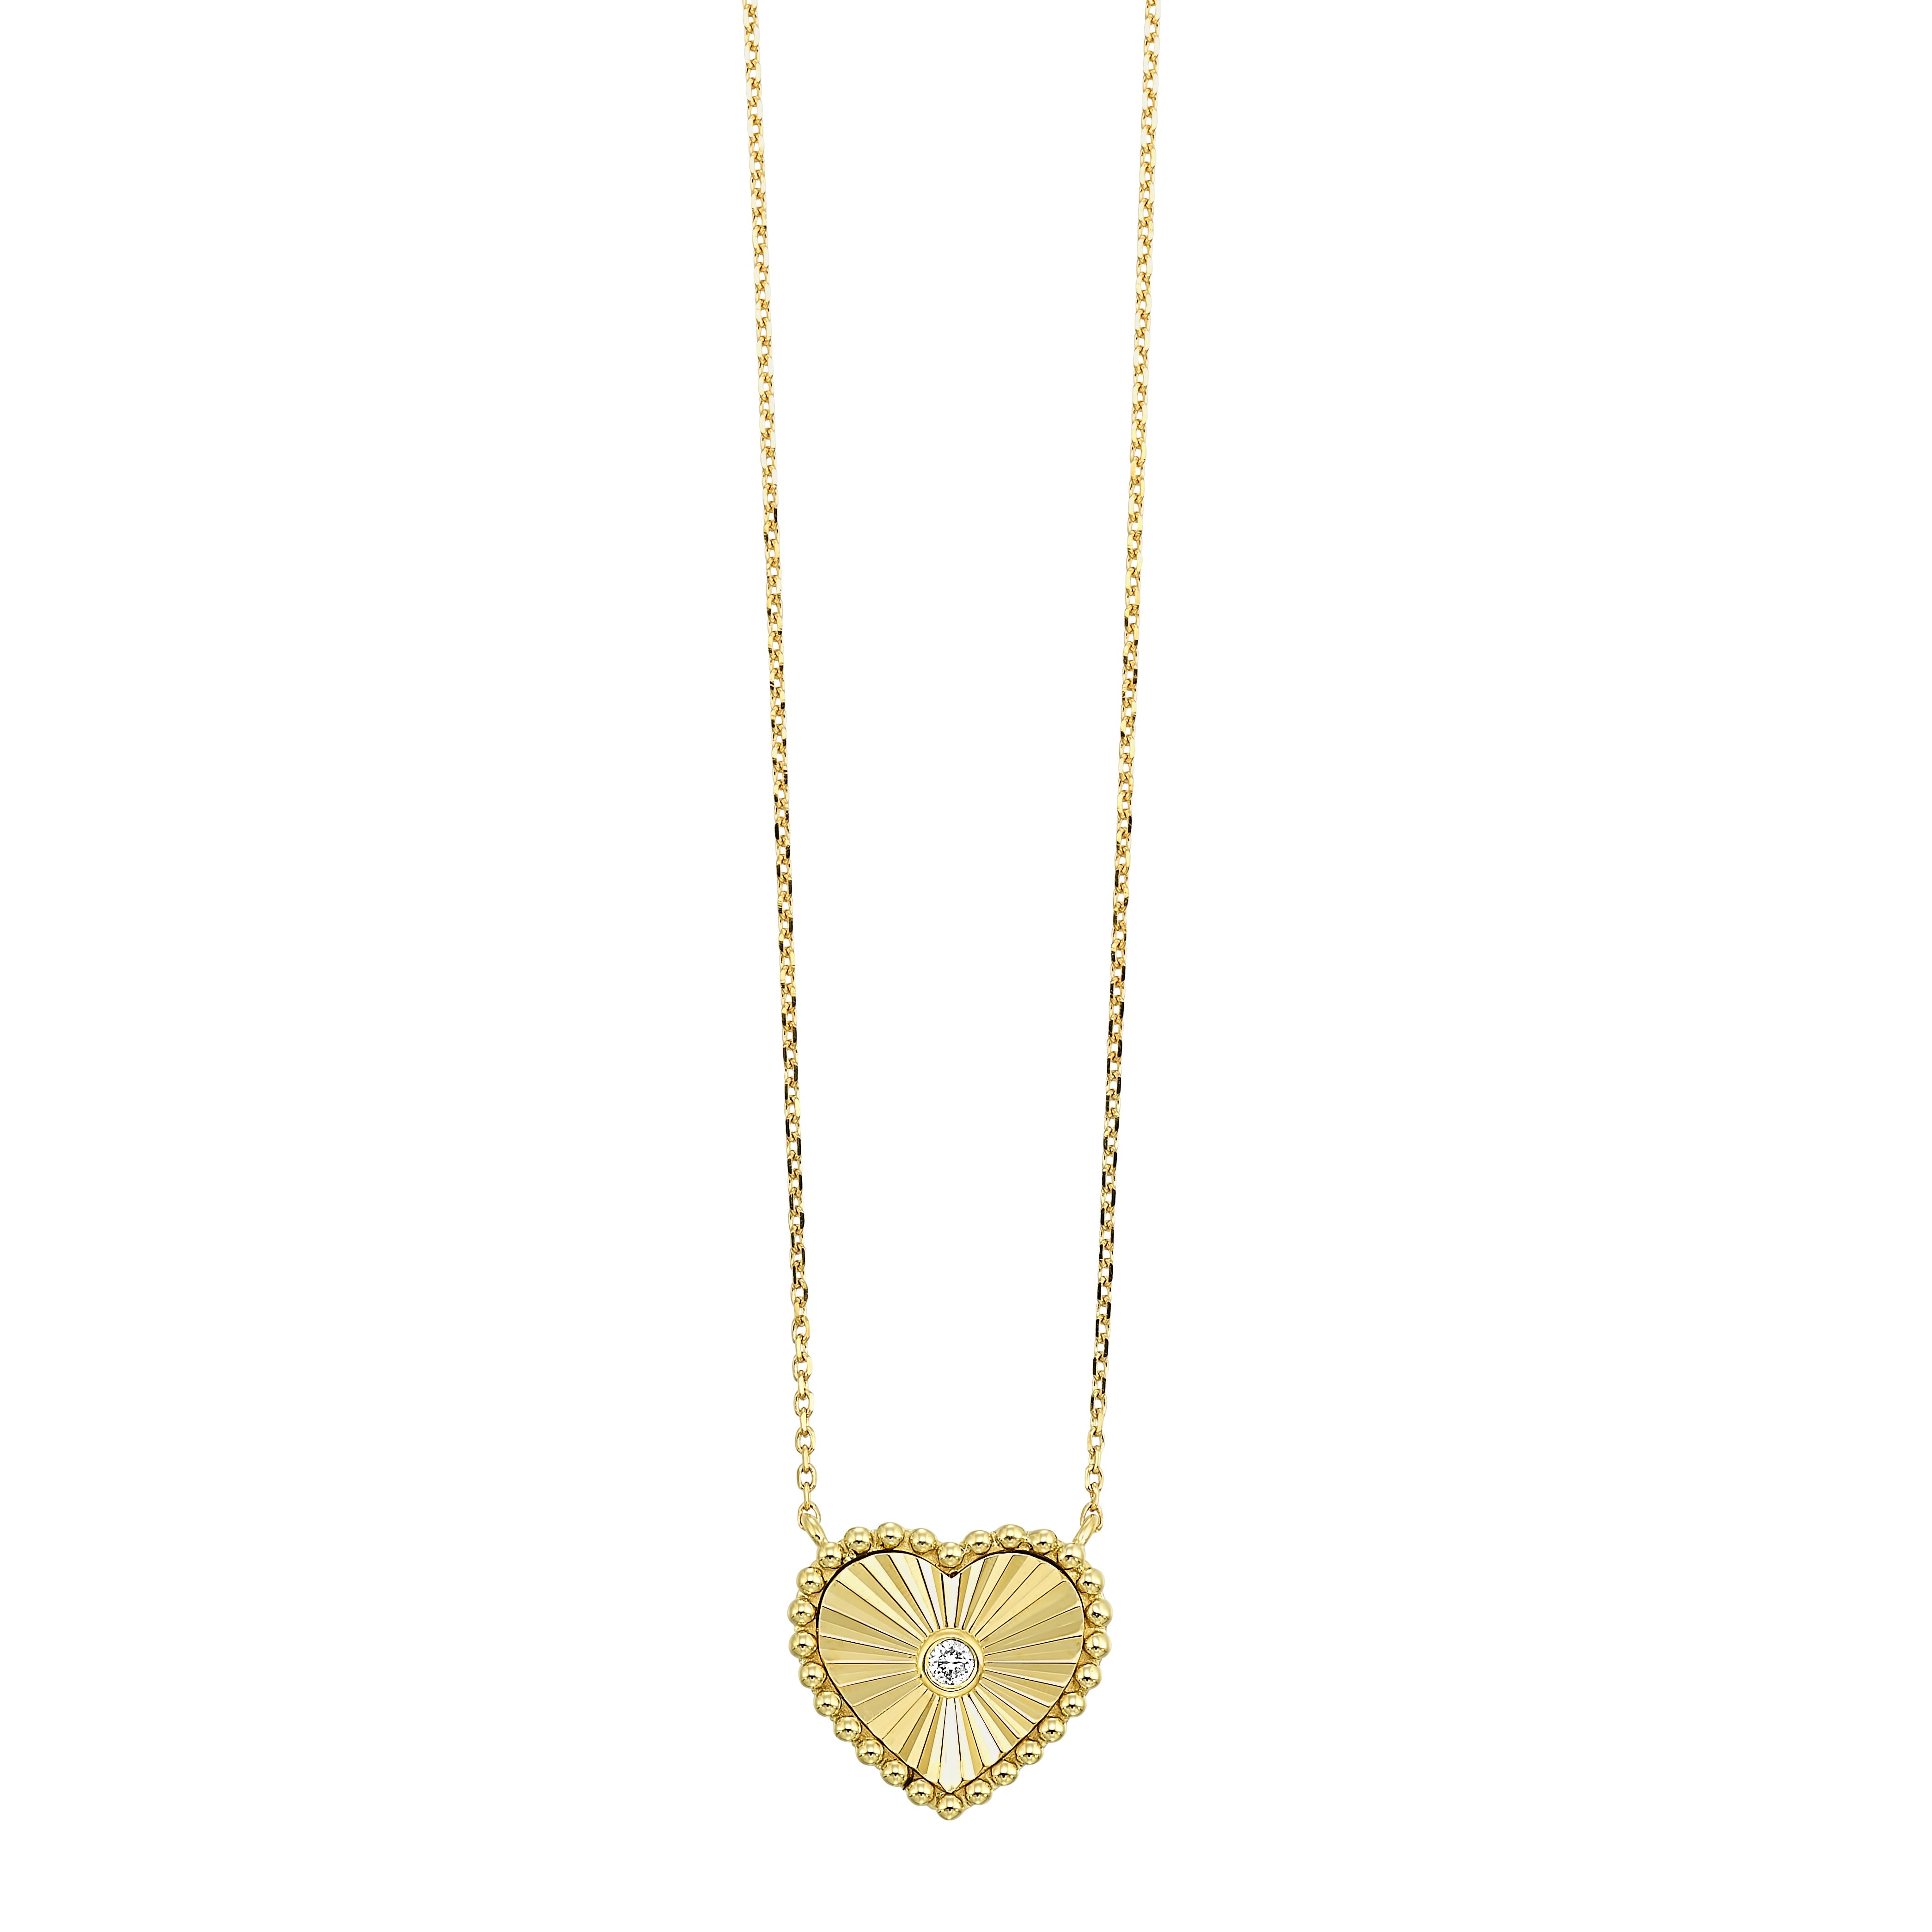 10k yellow gold heart pendant